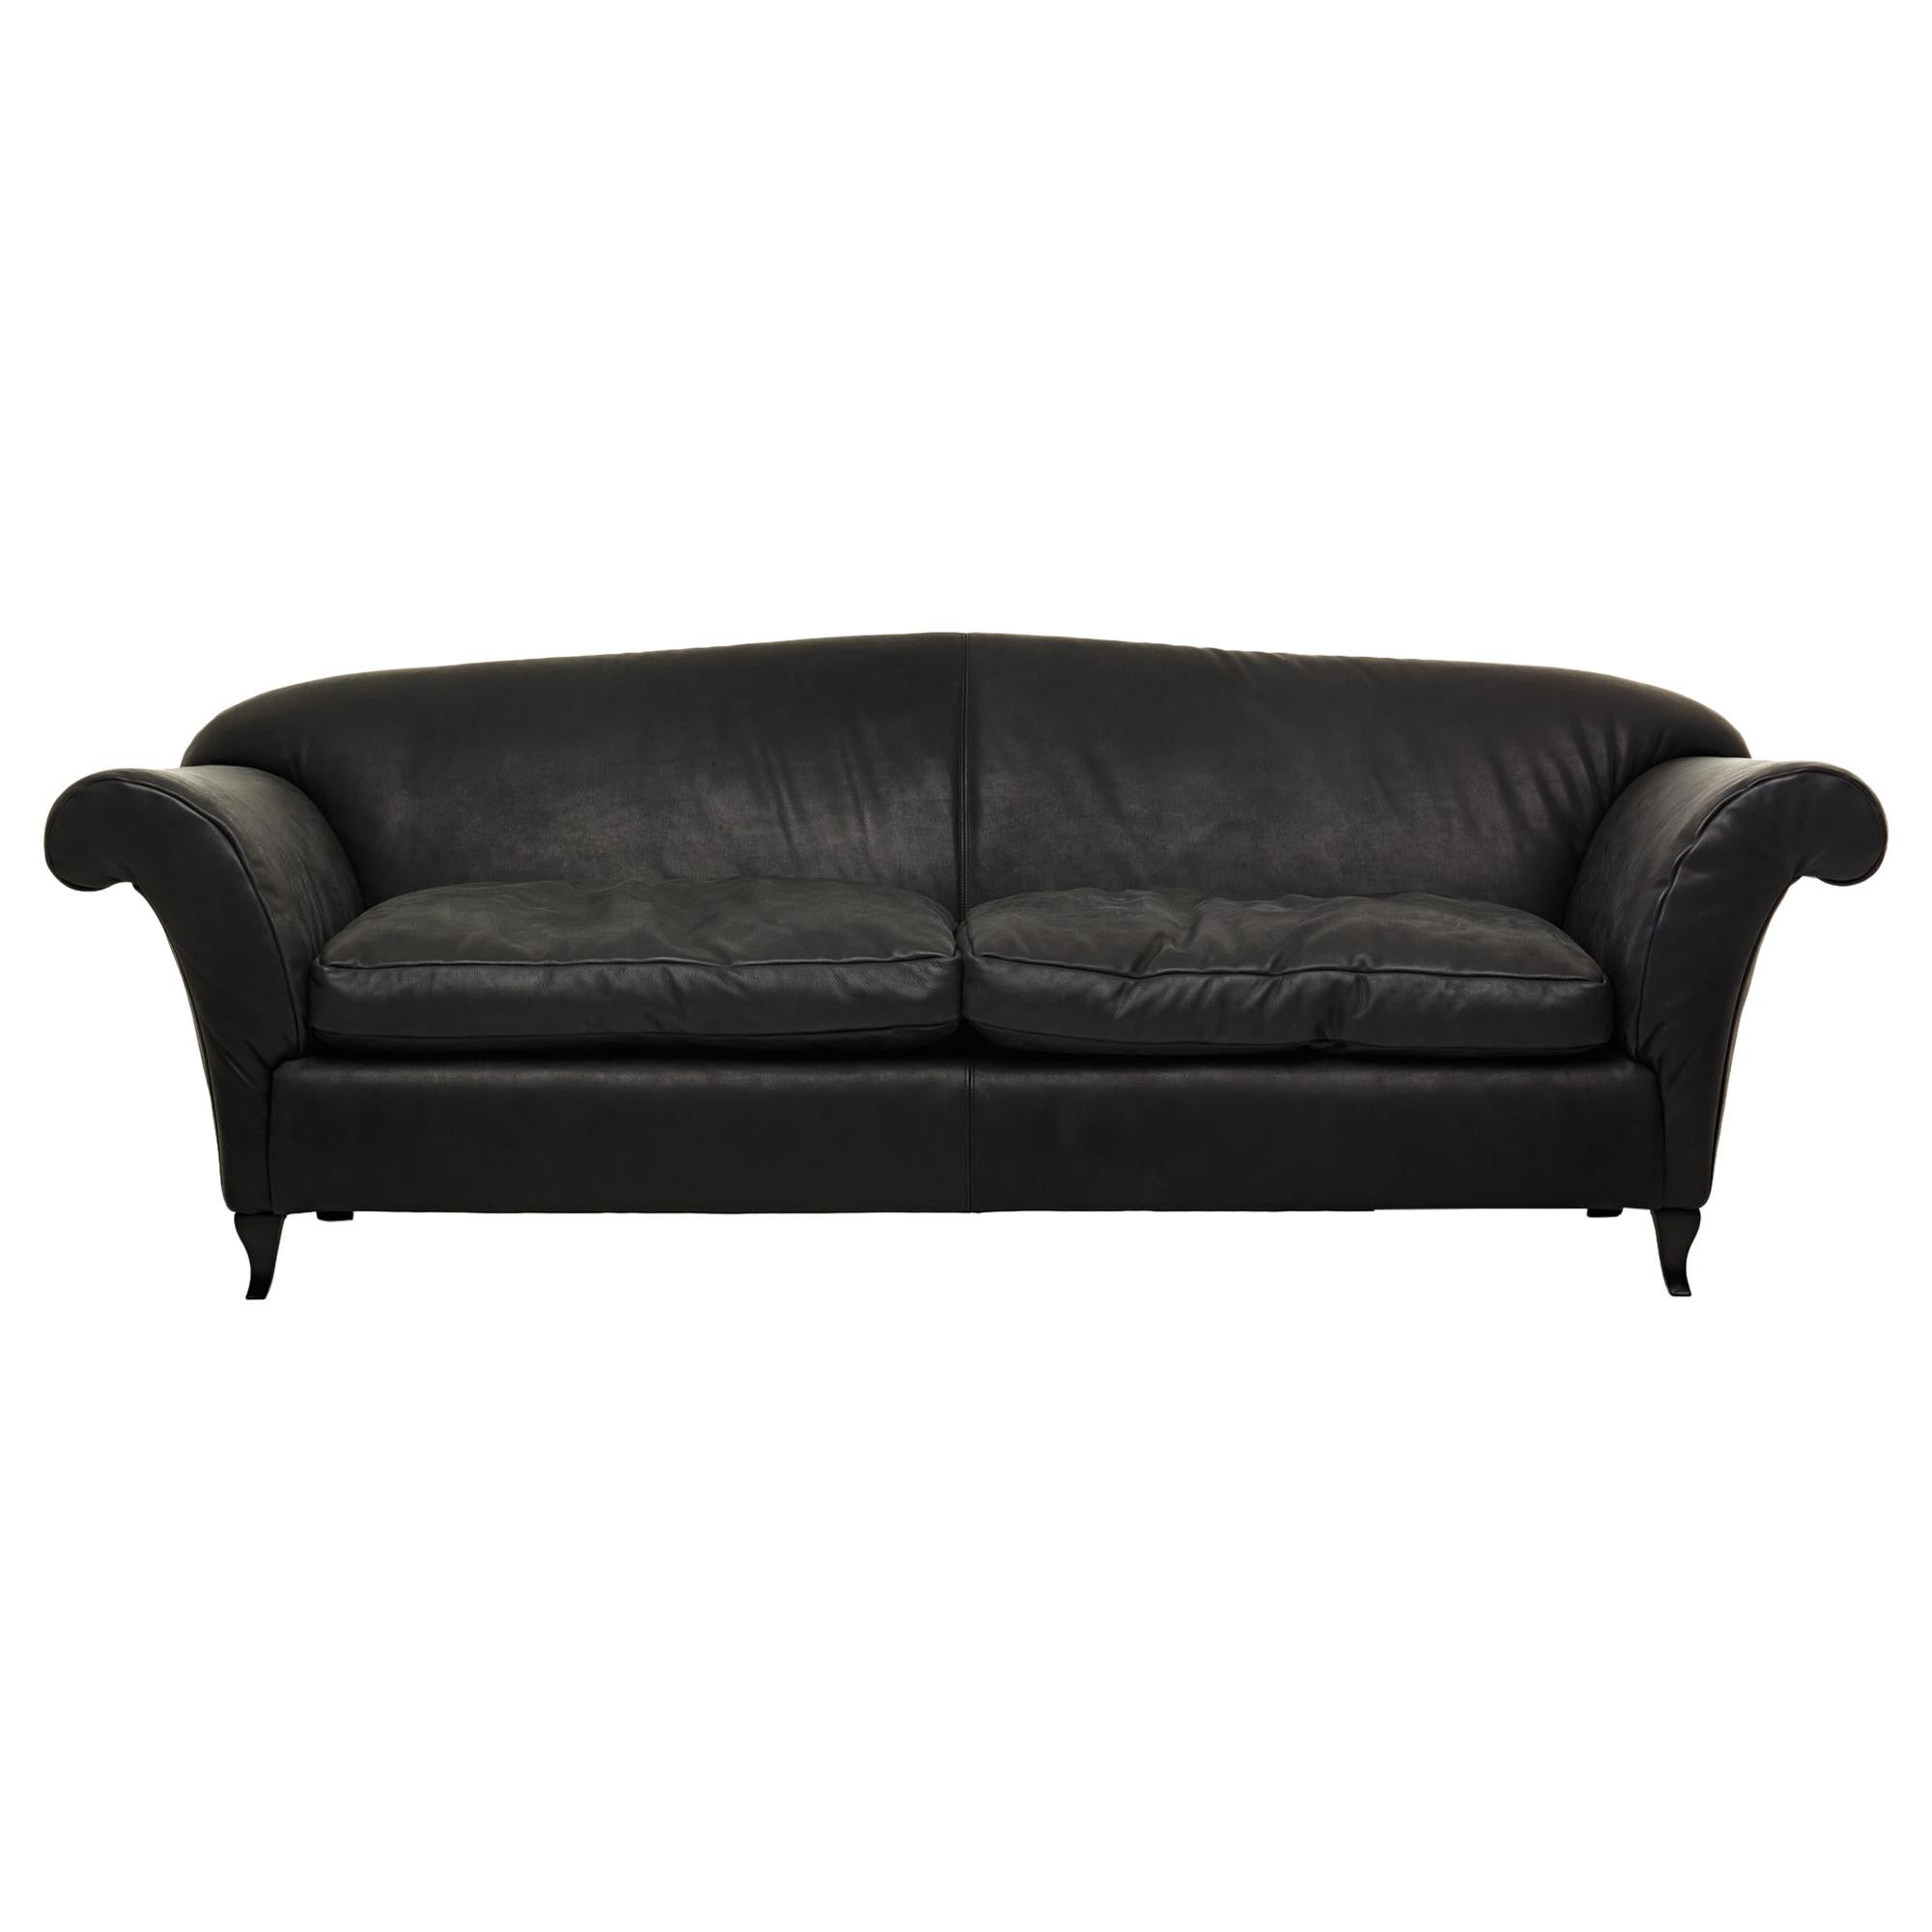 Modernes Sofa des 21. Jahrhunderts, gepolstert mit Leder im Angebot